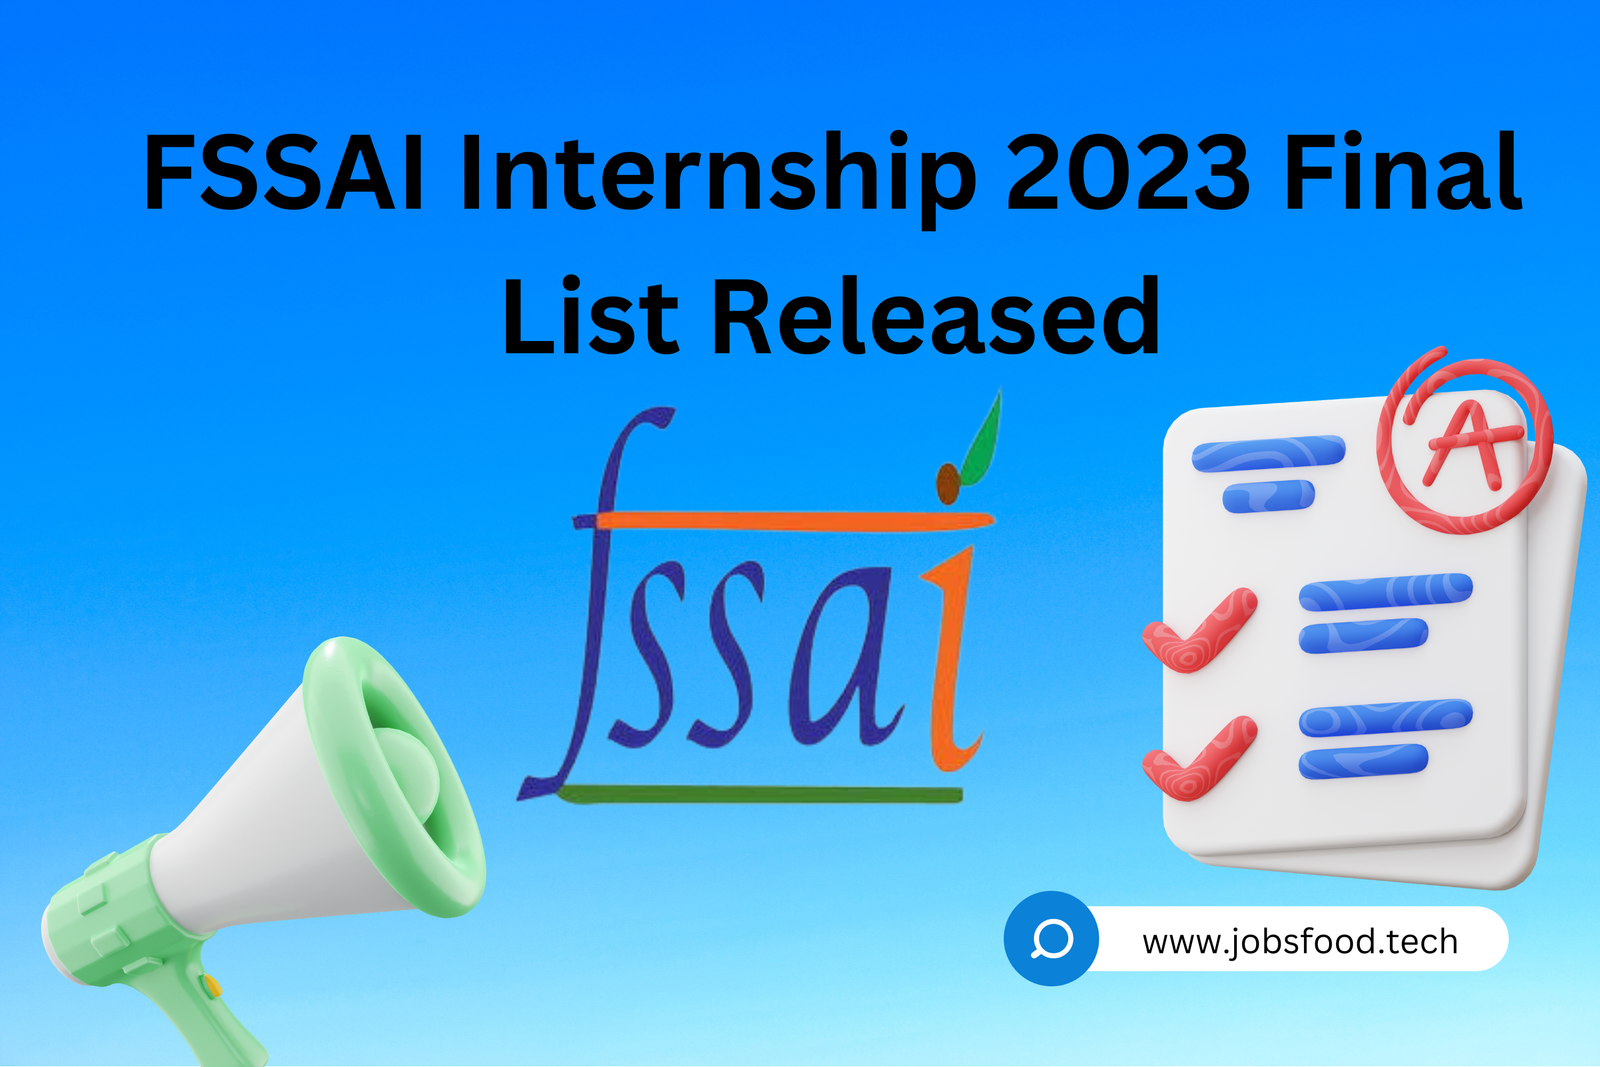 FSSAI Internship 2023 Final List Released